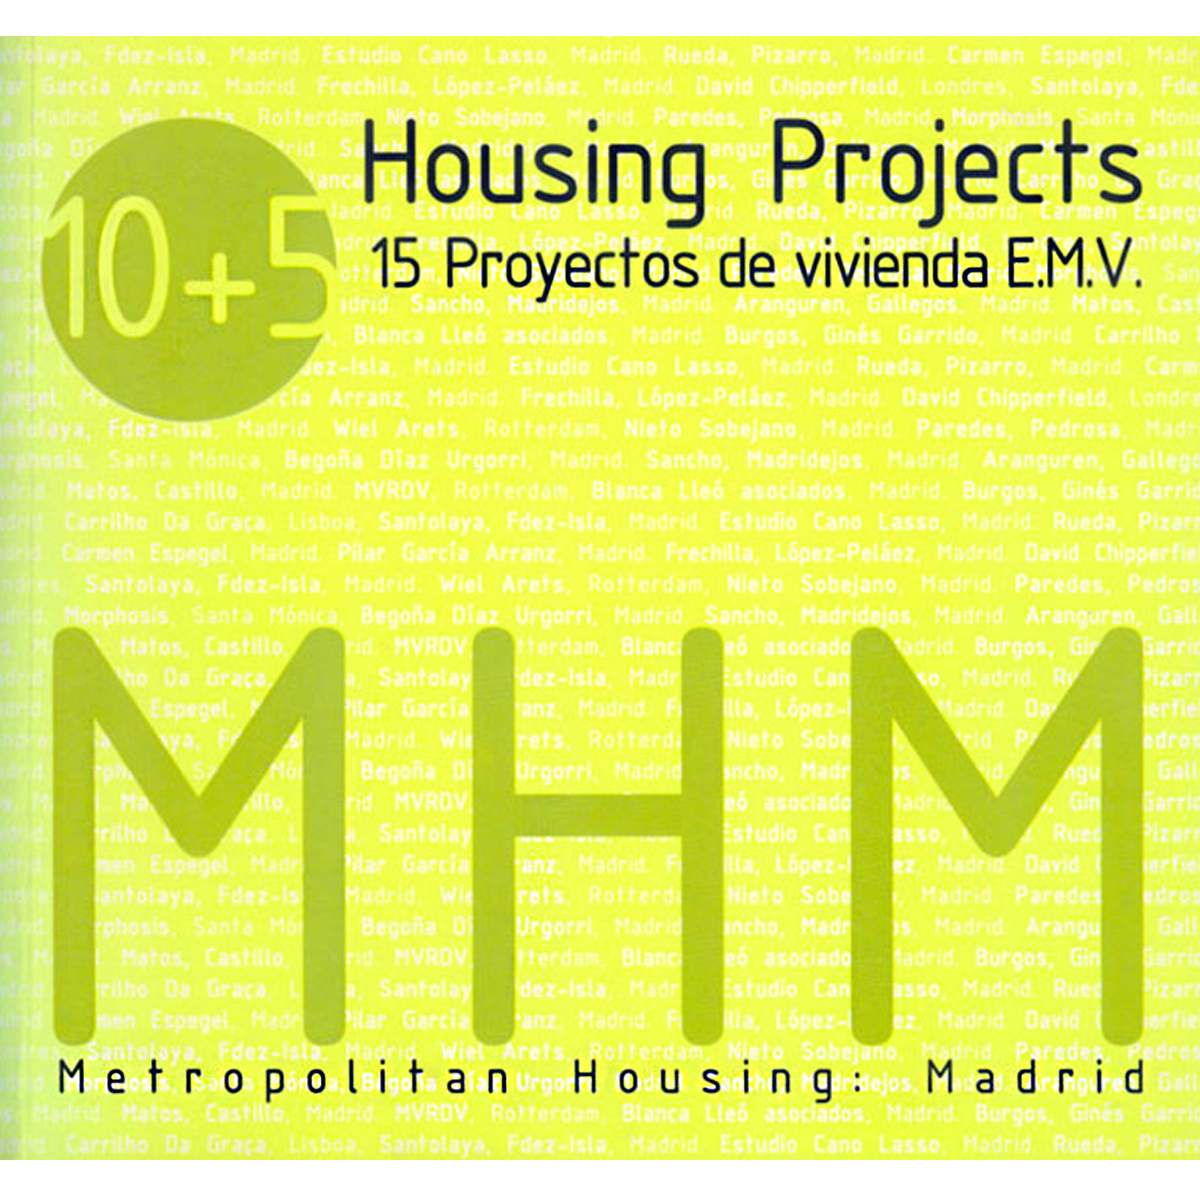 MHM (Metropolitan Housing: Madrid)